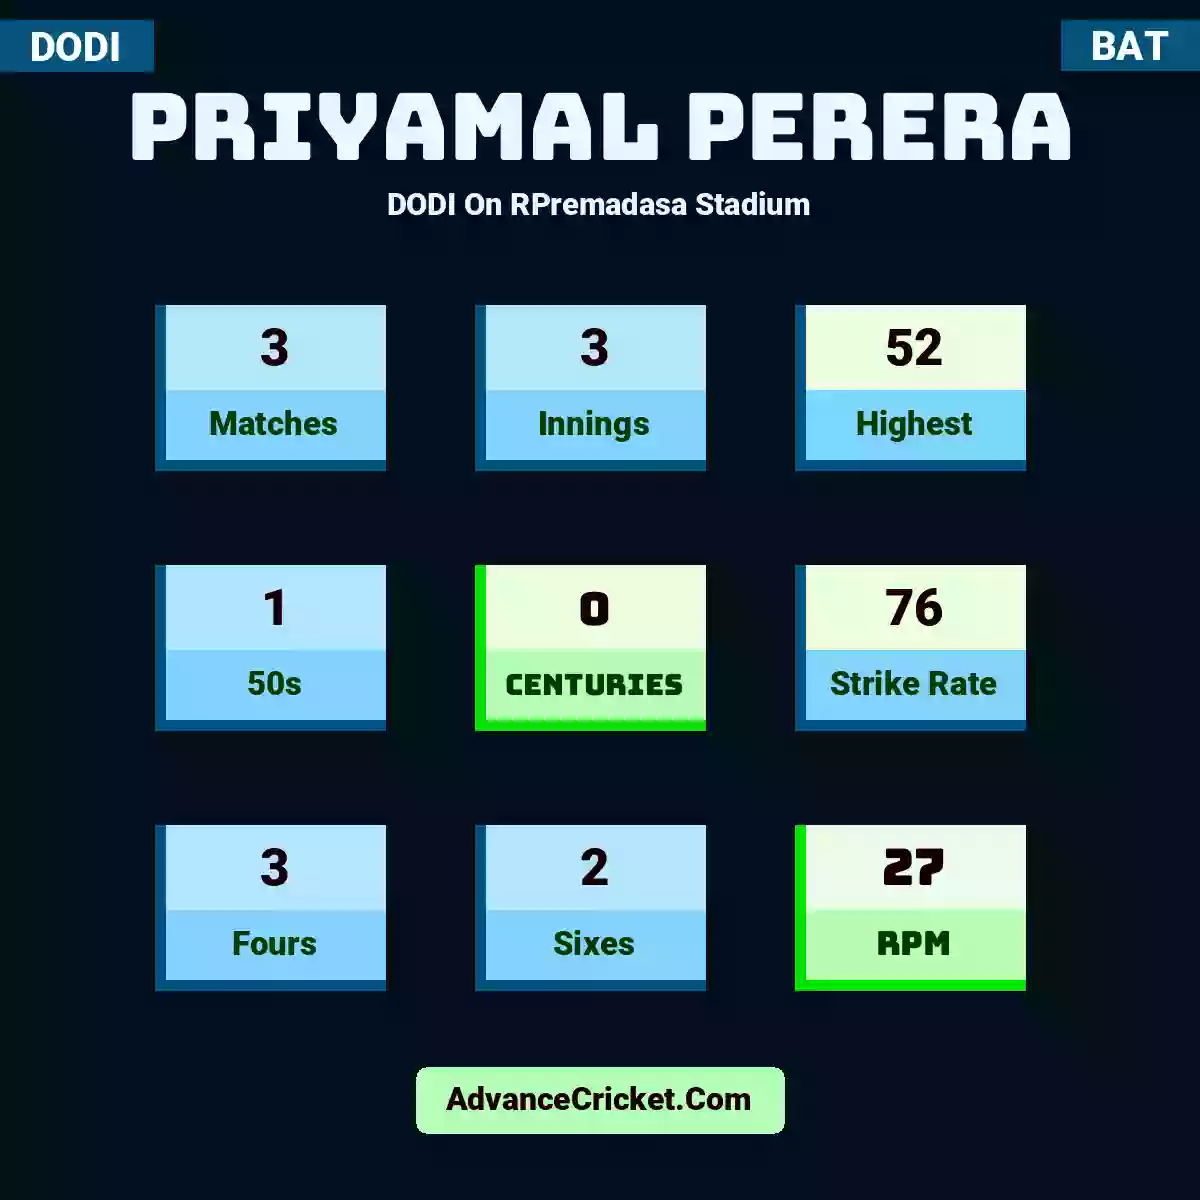 Priyamal Perera DODI  On RPremadasa Stadium, Priyamal Perera played 3 matches, scored 52 runs as highest, 1 half-centuries, and 0 centuries, with a strike rate of 76. P.Perera hit 3 fours and 2 sixes, with an RPM of 27.